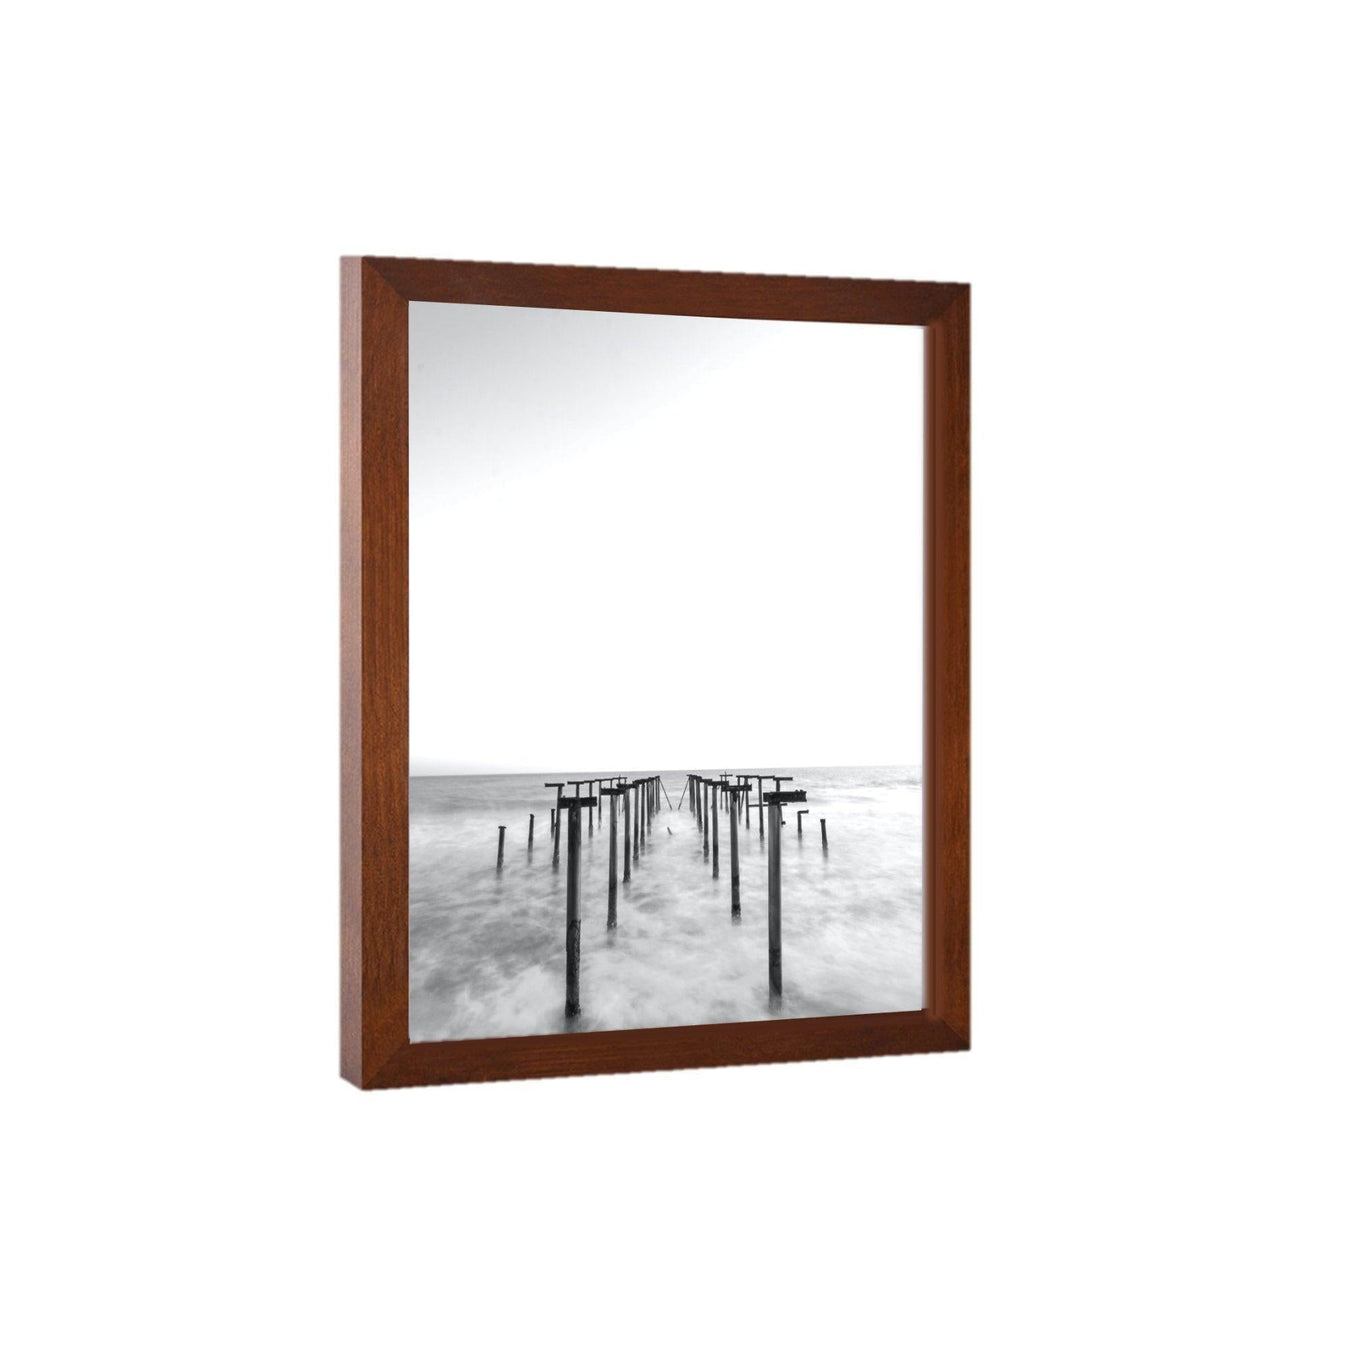 Brown Wood Picture Frames - New Jersey Frame Shop Custom Framing